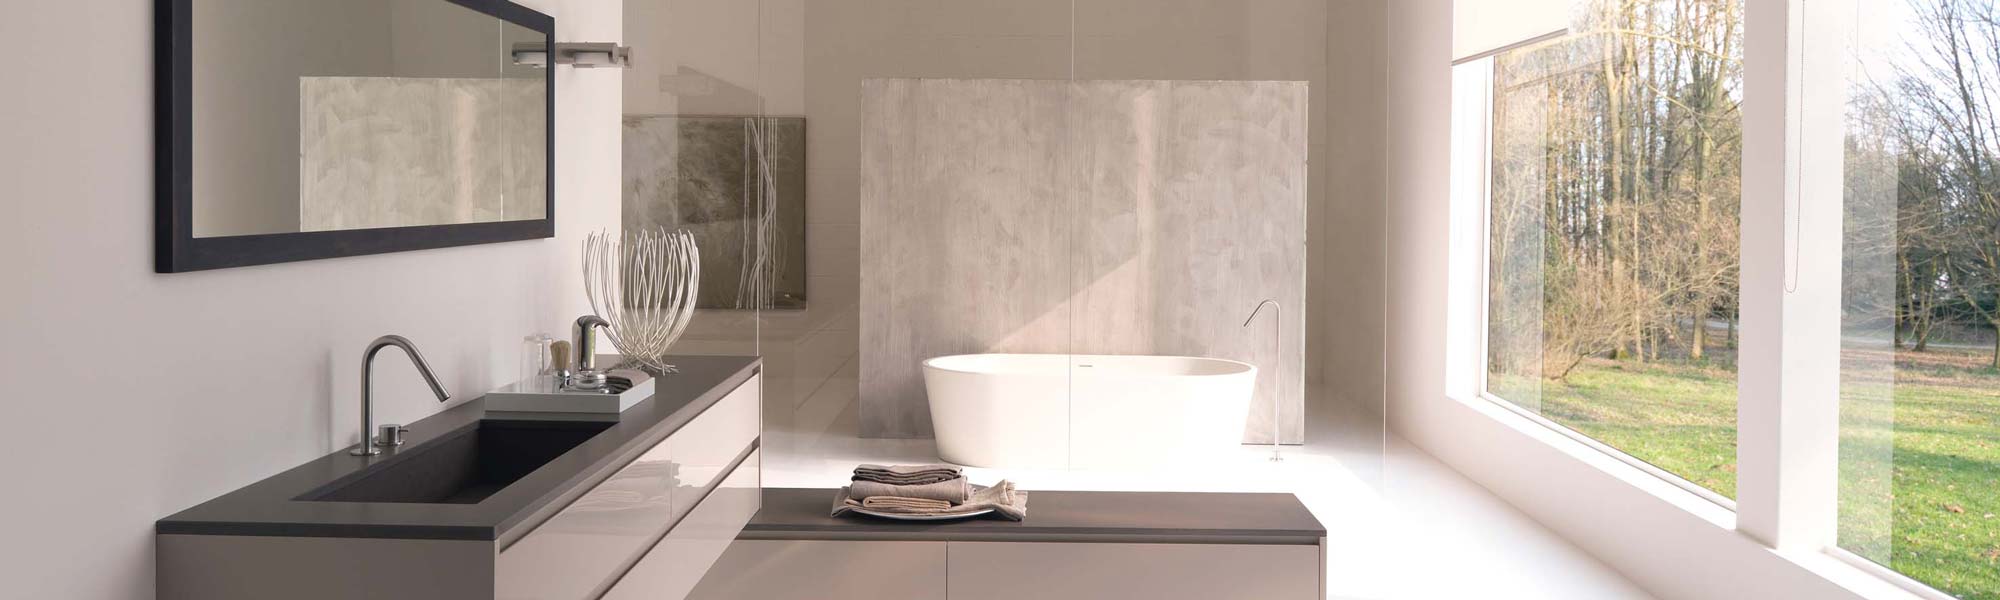 modern bathroom design in Venice, FL | Design and Remodeling Solutions